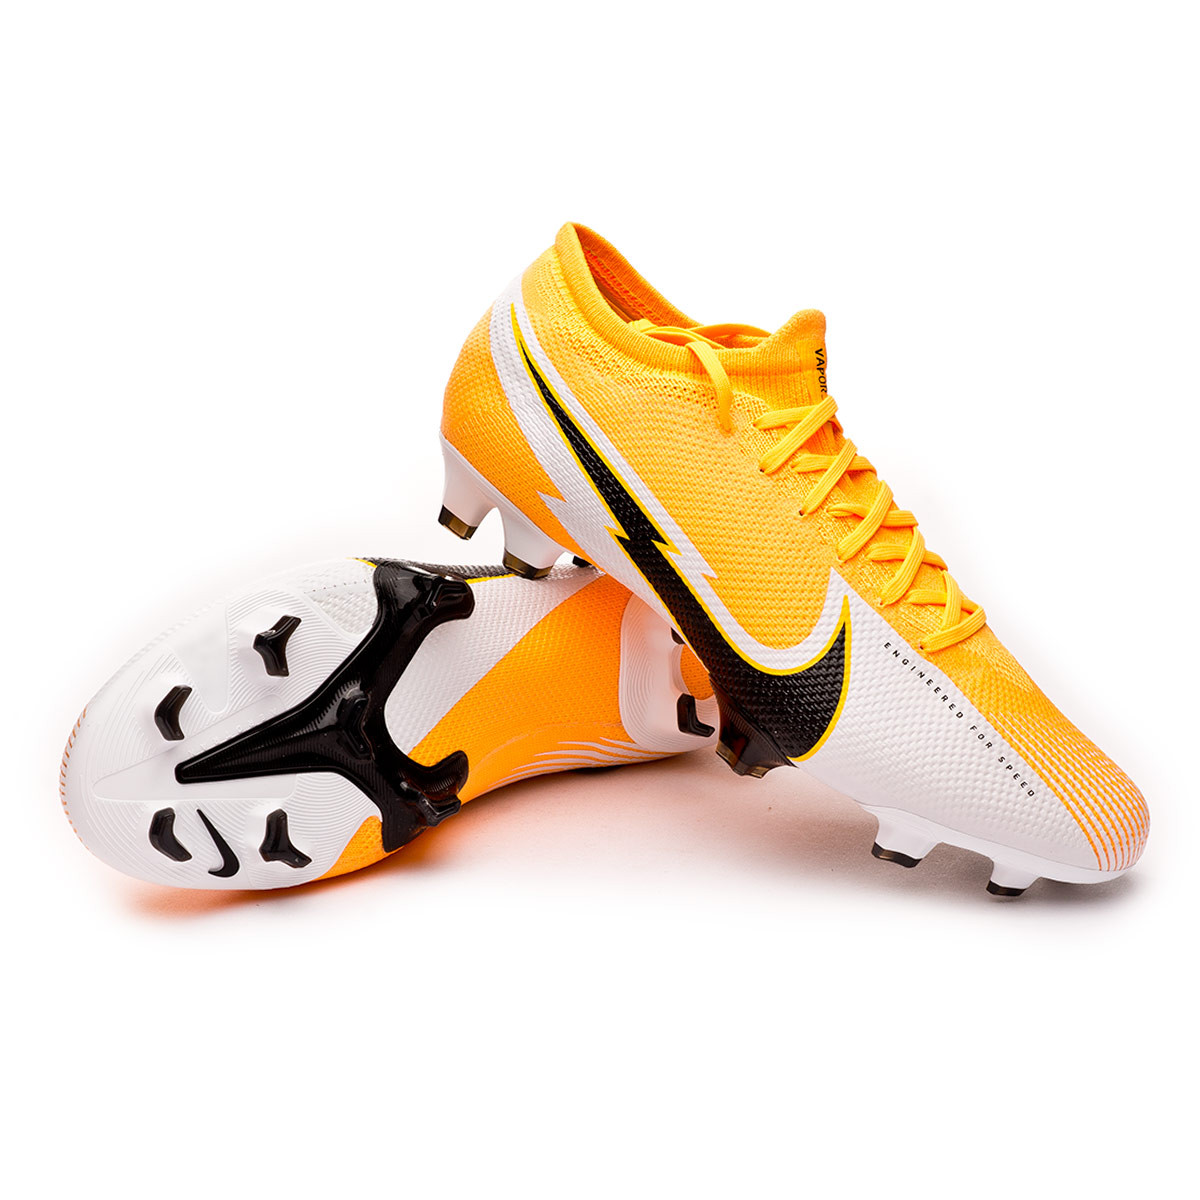 Zapatos de fútbol Nike Mercurial Vapor XIII Pro FG Laser  orange-Black-White-Laser orange - Tienda de fútbol Fútbol Emotion